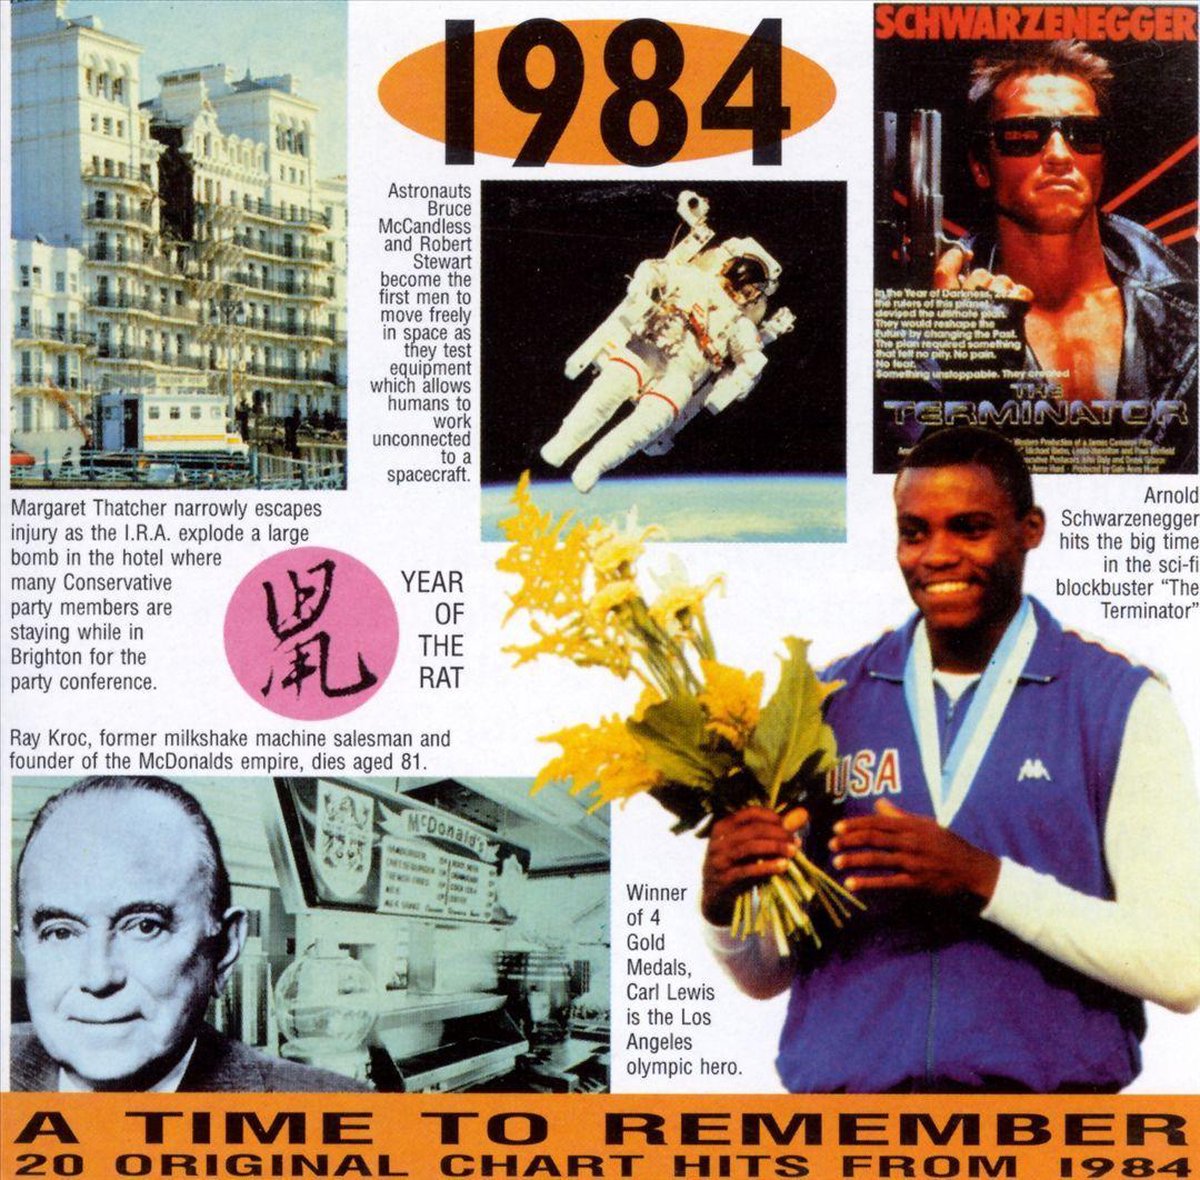 1984: 20 Original Chart Hits - various artists